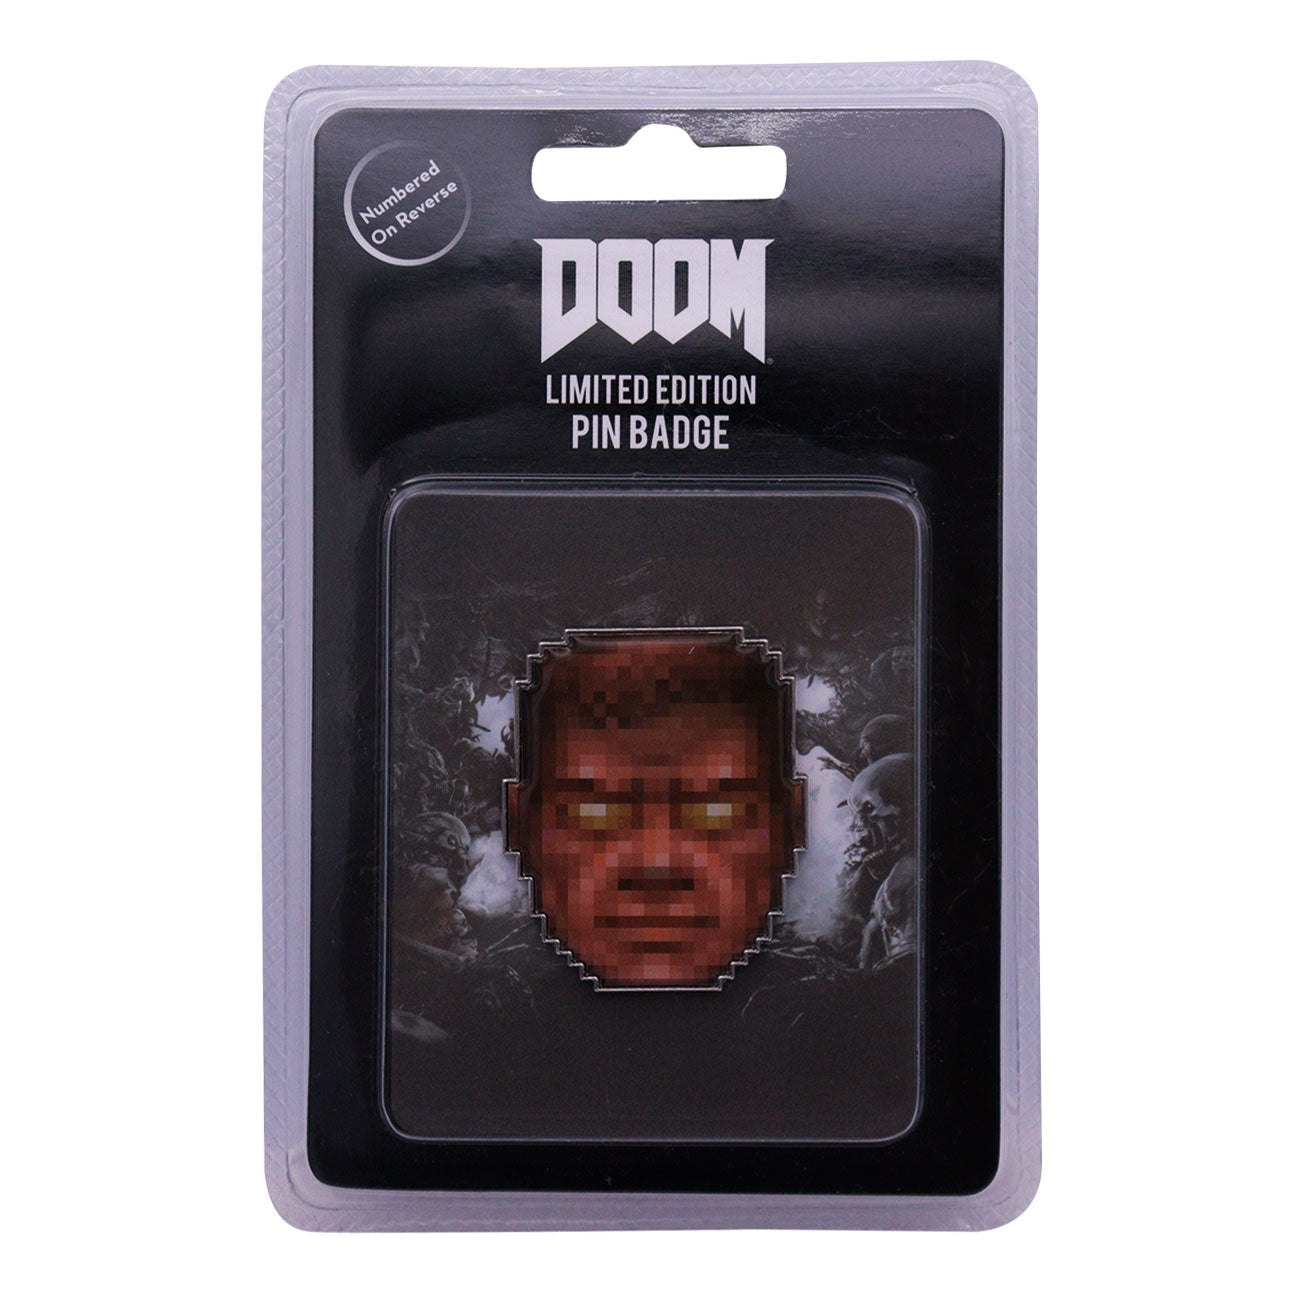 DOOM Limited Edition Pin Badge